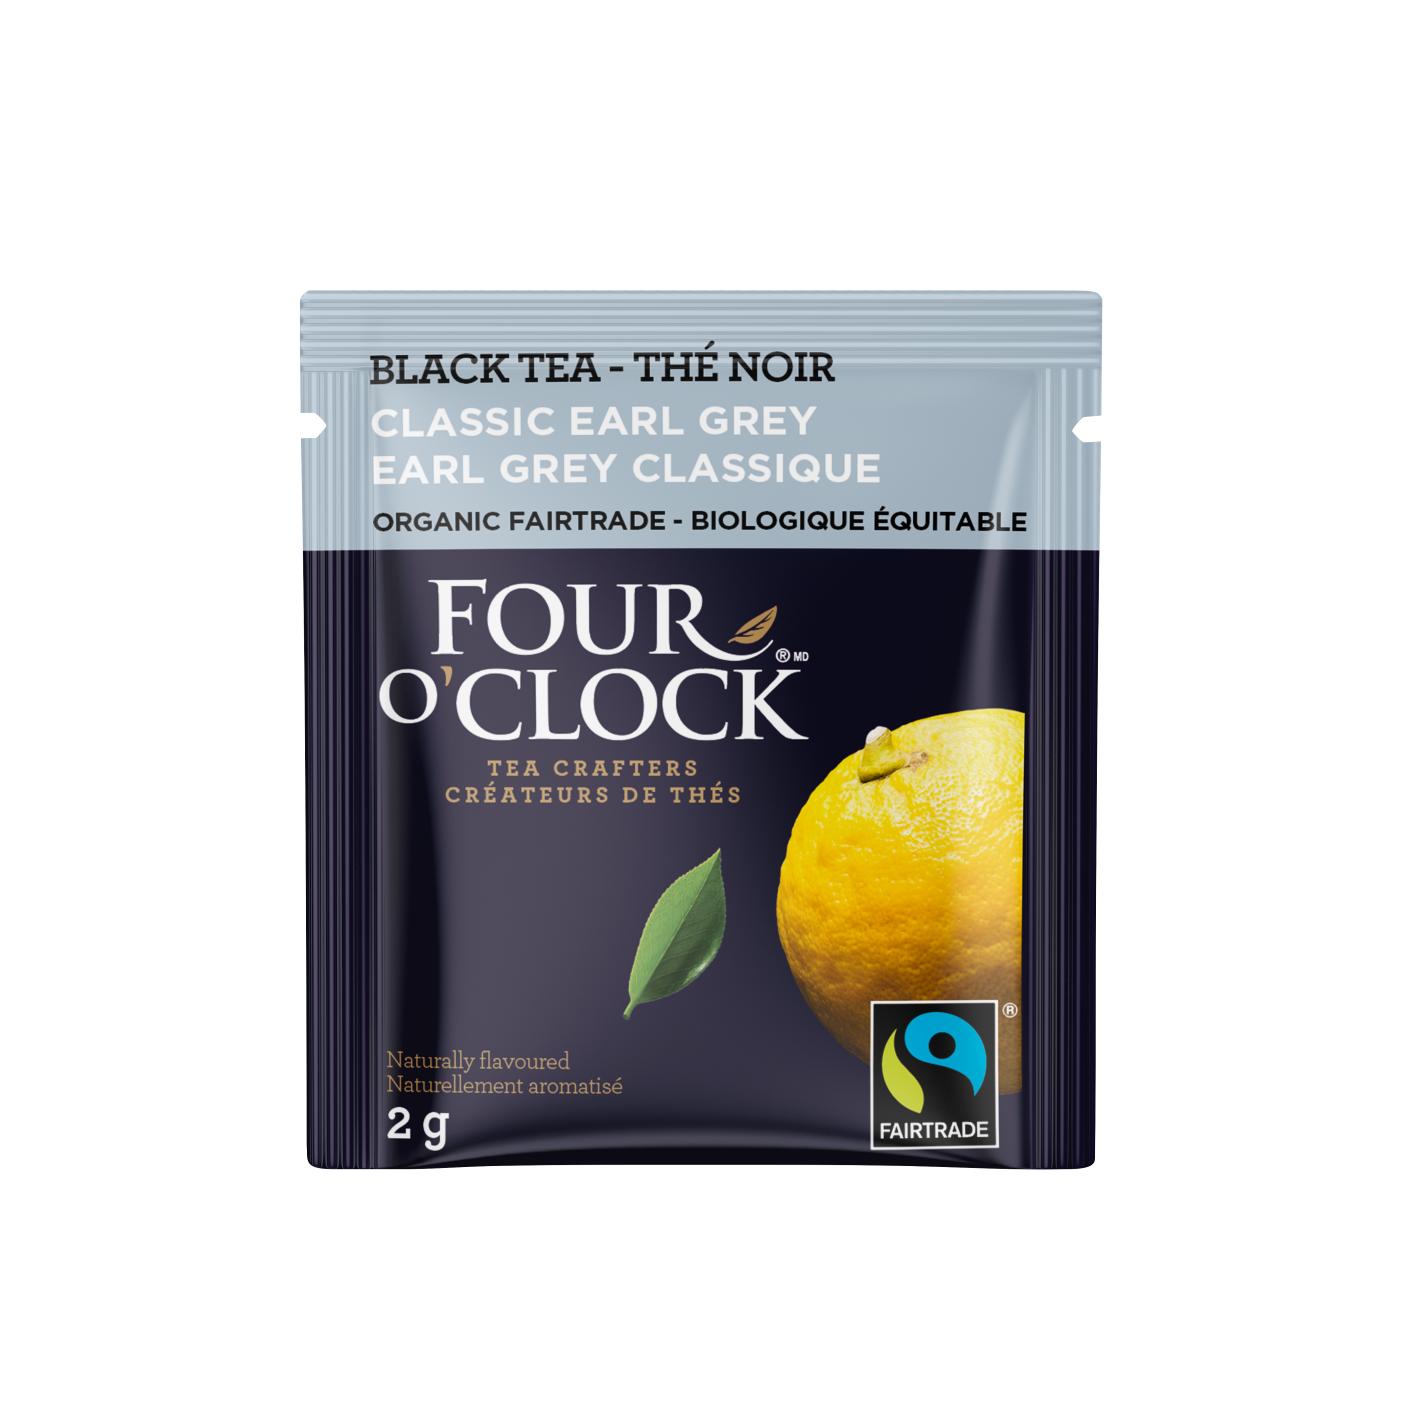 Classic Earl Grey Organic Fairtrade Black Tea